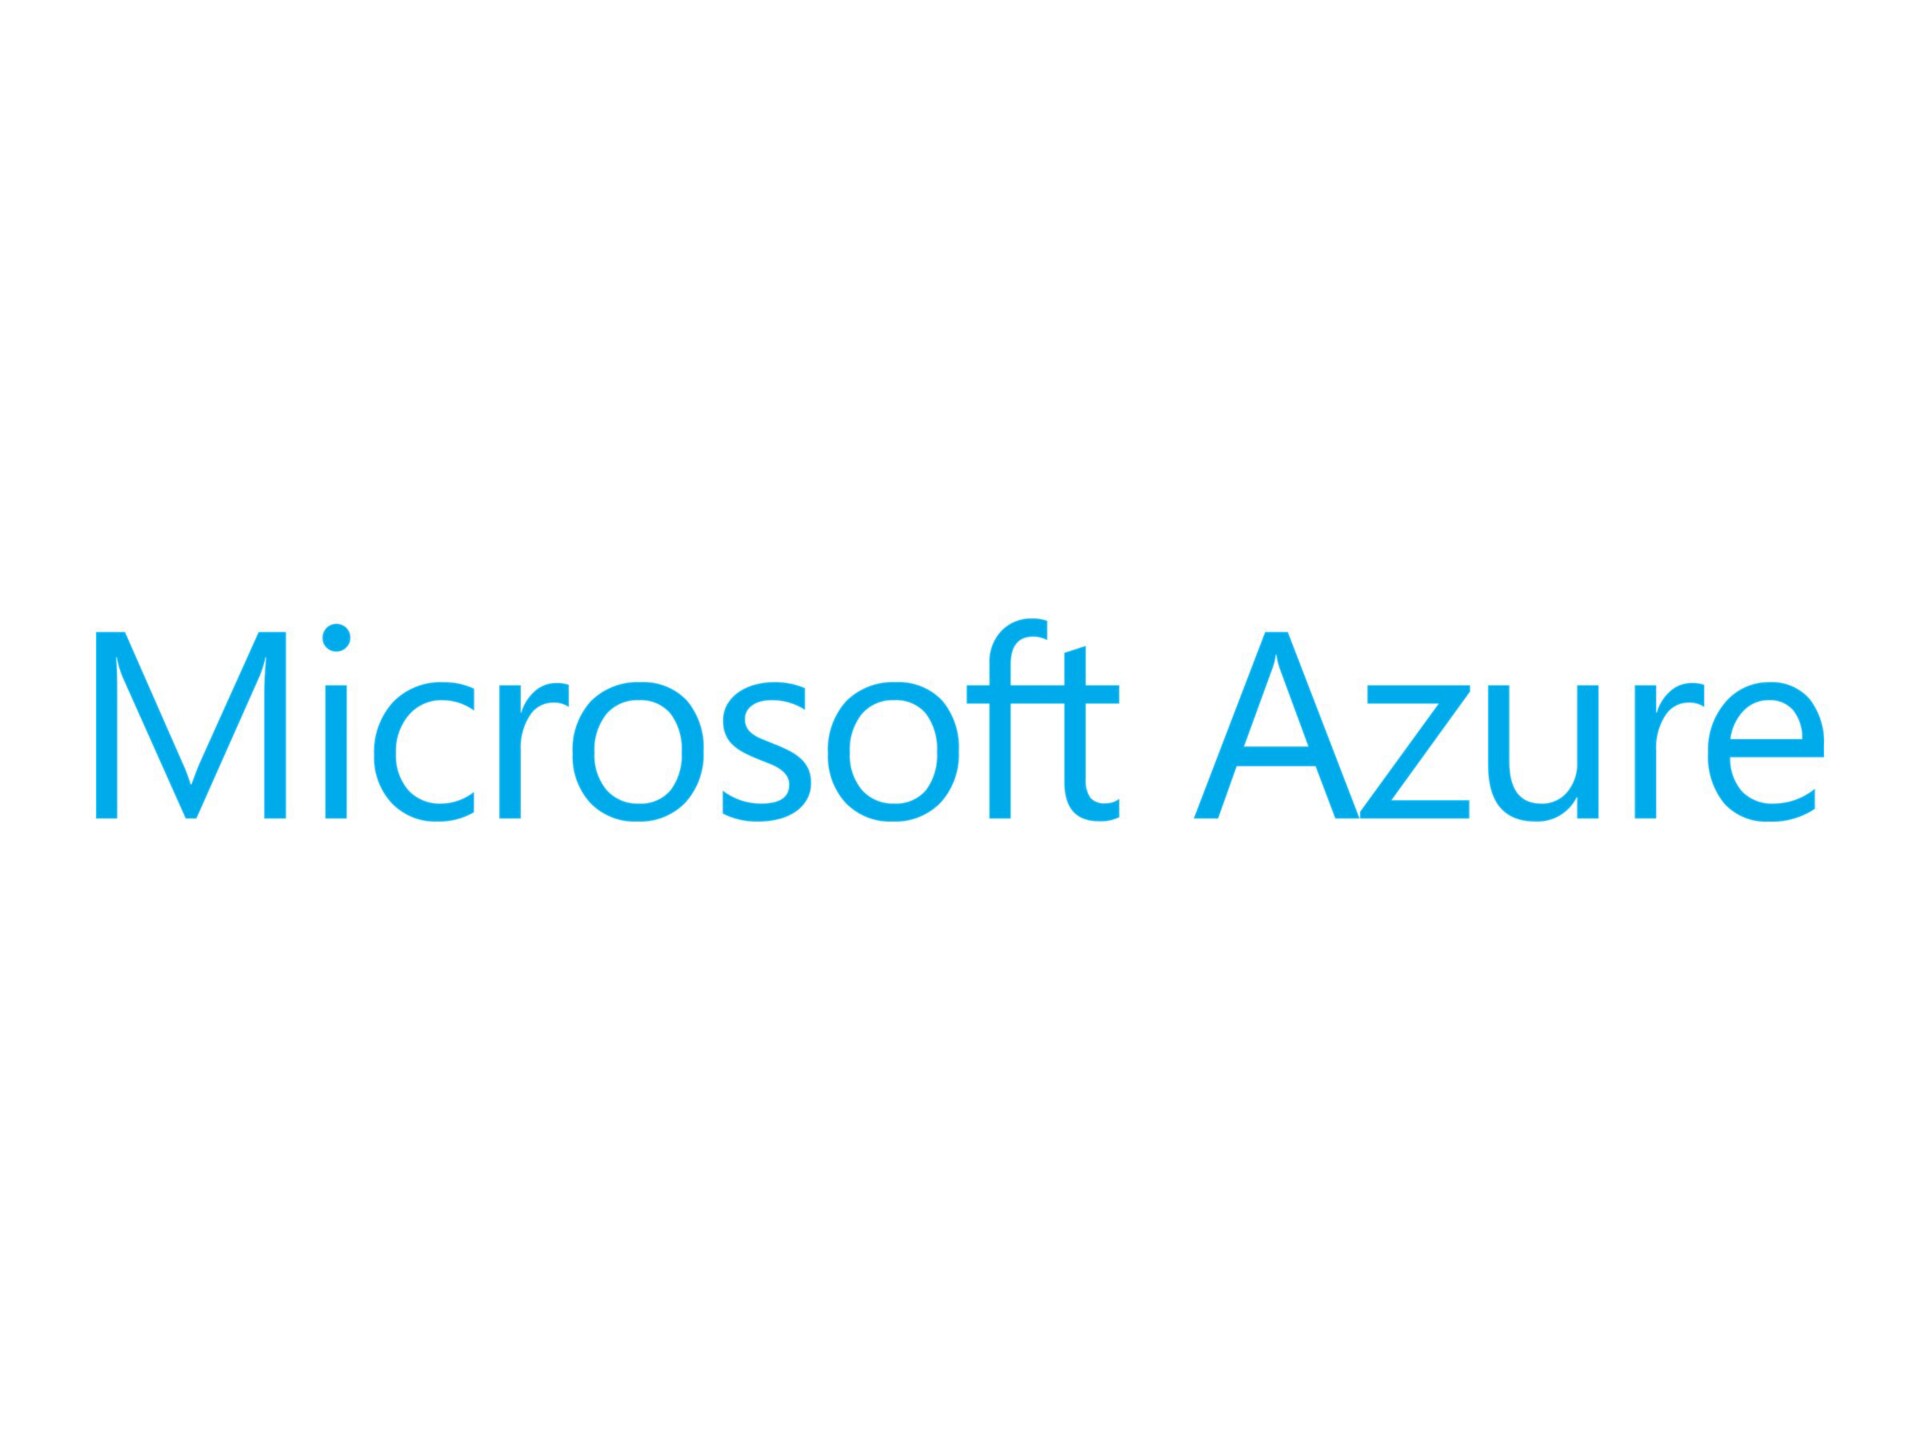 Microsoft Azure PHP Development Toolkit - overage fee - 10 GB capacity